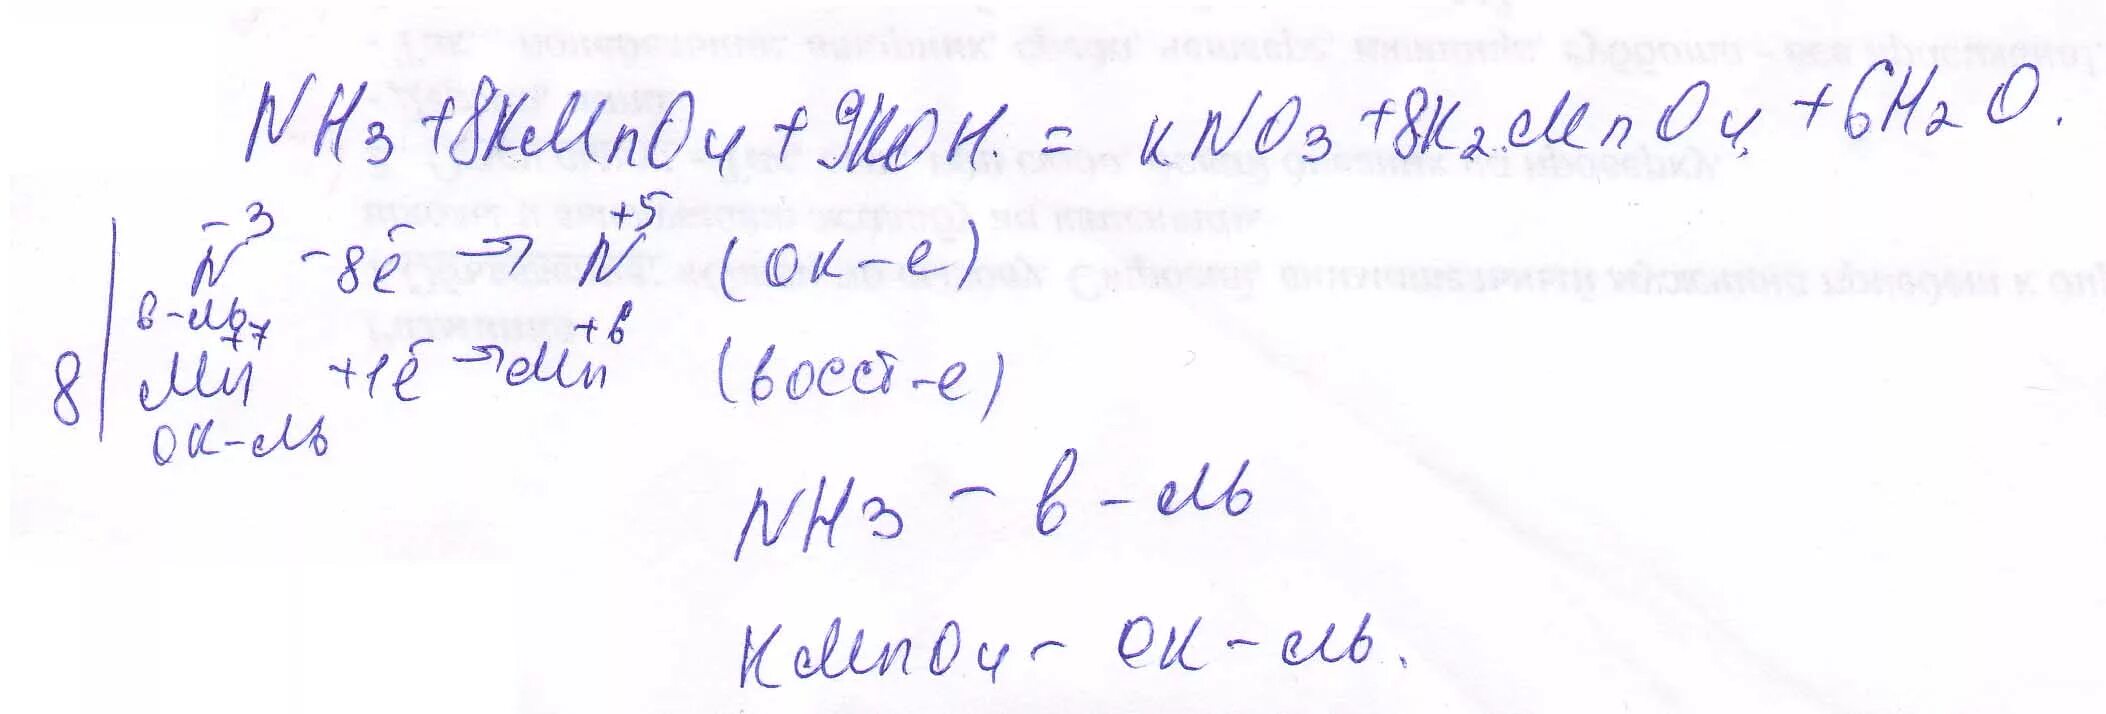 Mno2 hcl koh. Nh3+kmno4+Koh метод полуреакций. Nh3 kmno4 Koh. Nh3+kmno4+Koh ОВР. Nh3 kmno4 Koh kno3 k2mno4 h2o ОВР.